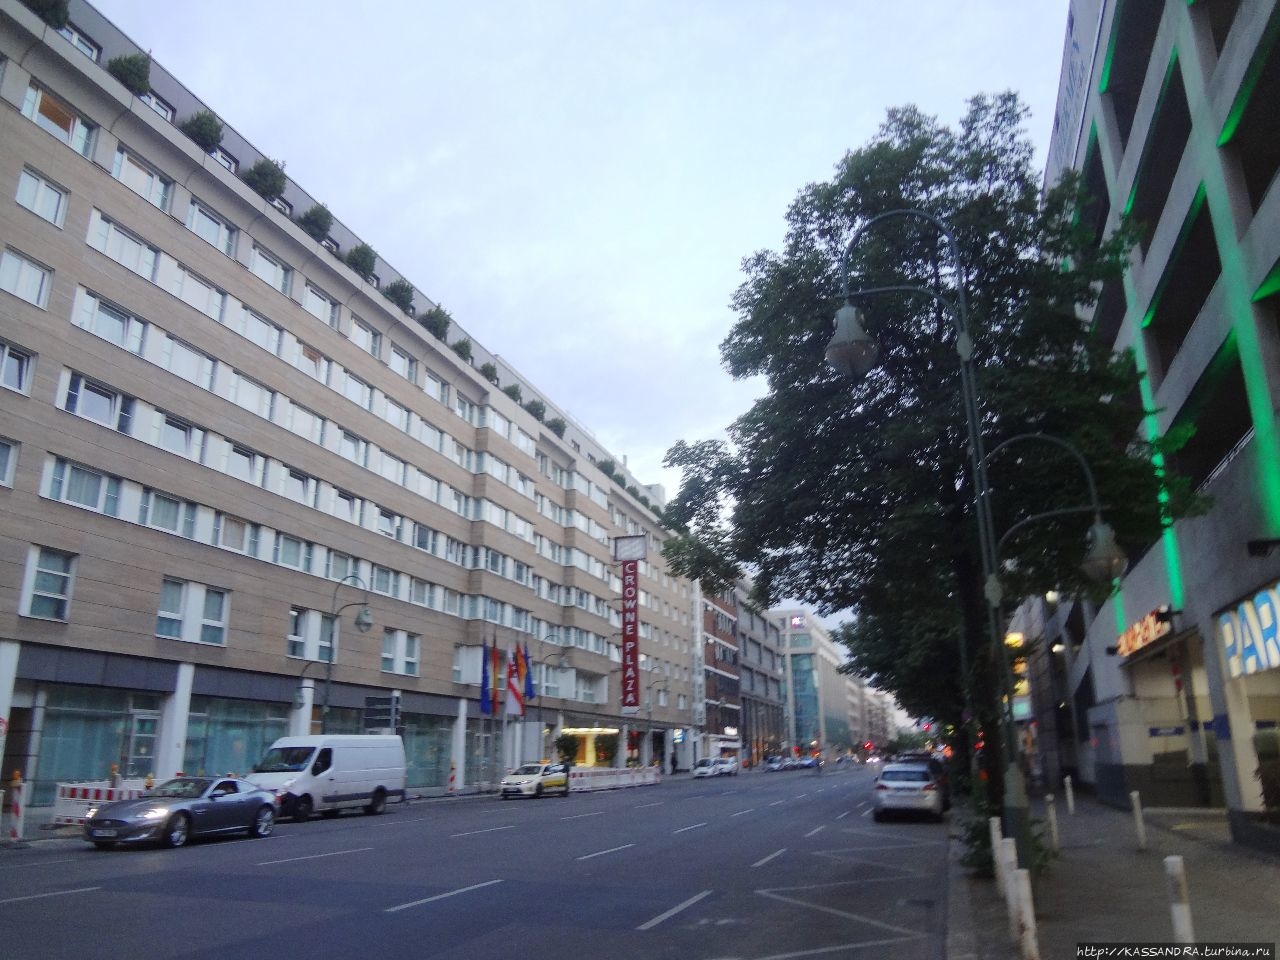 Crowne Plaza Berlin City Centre